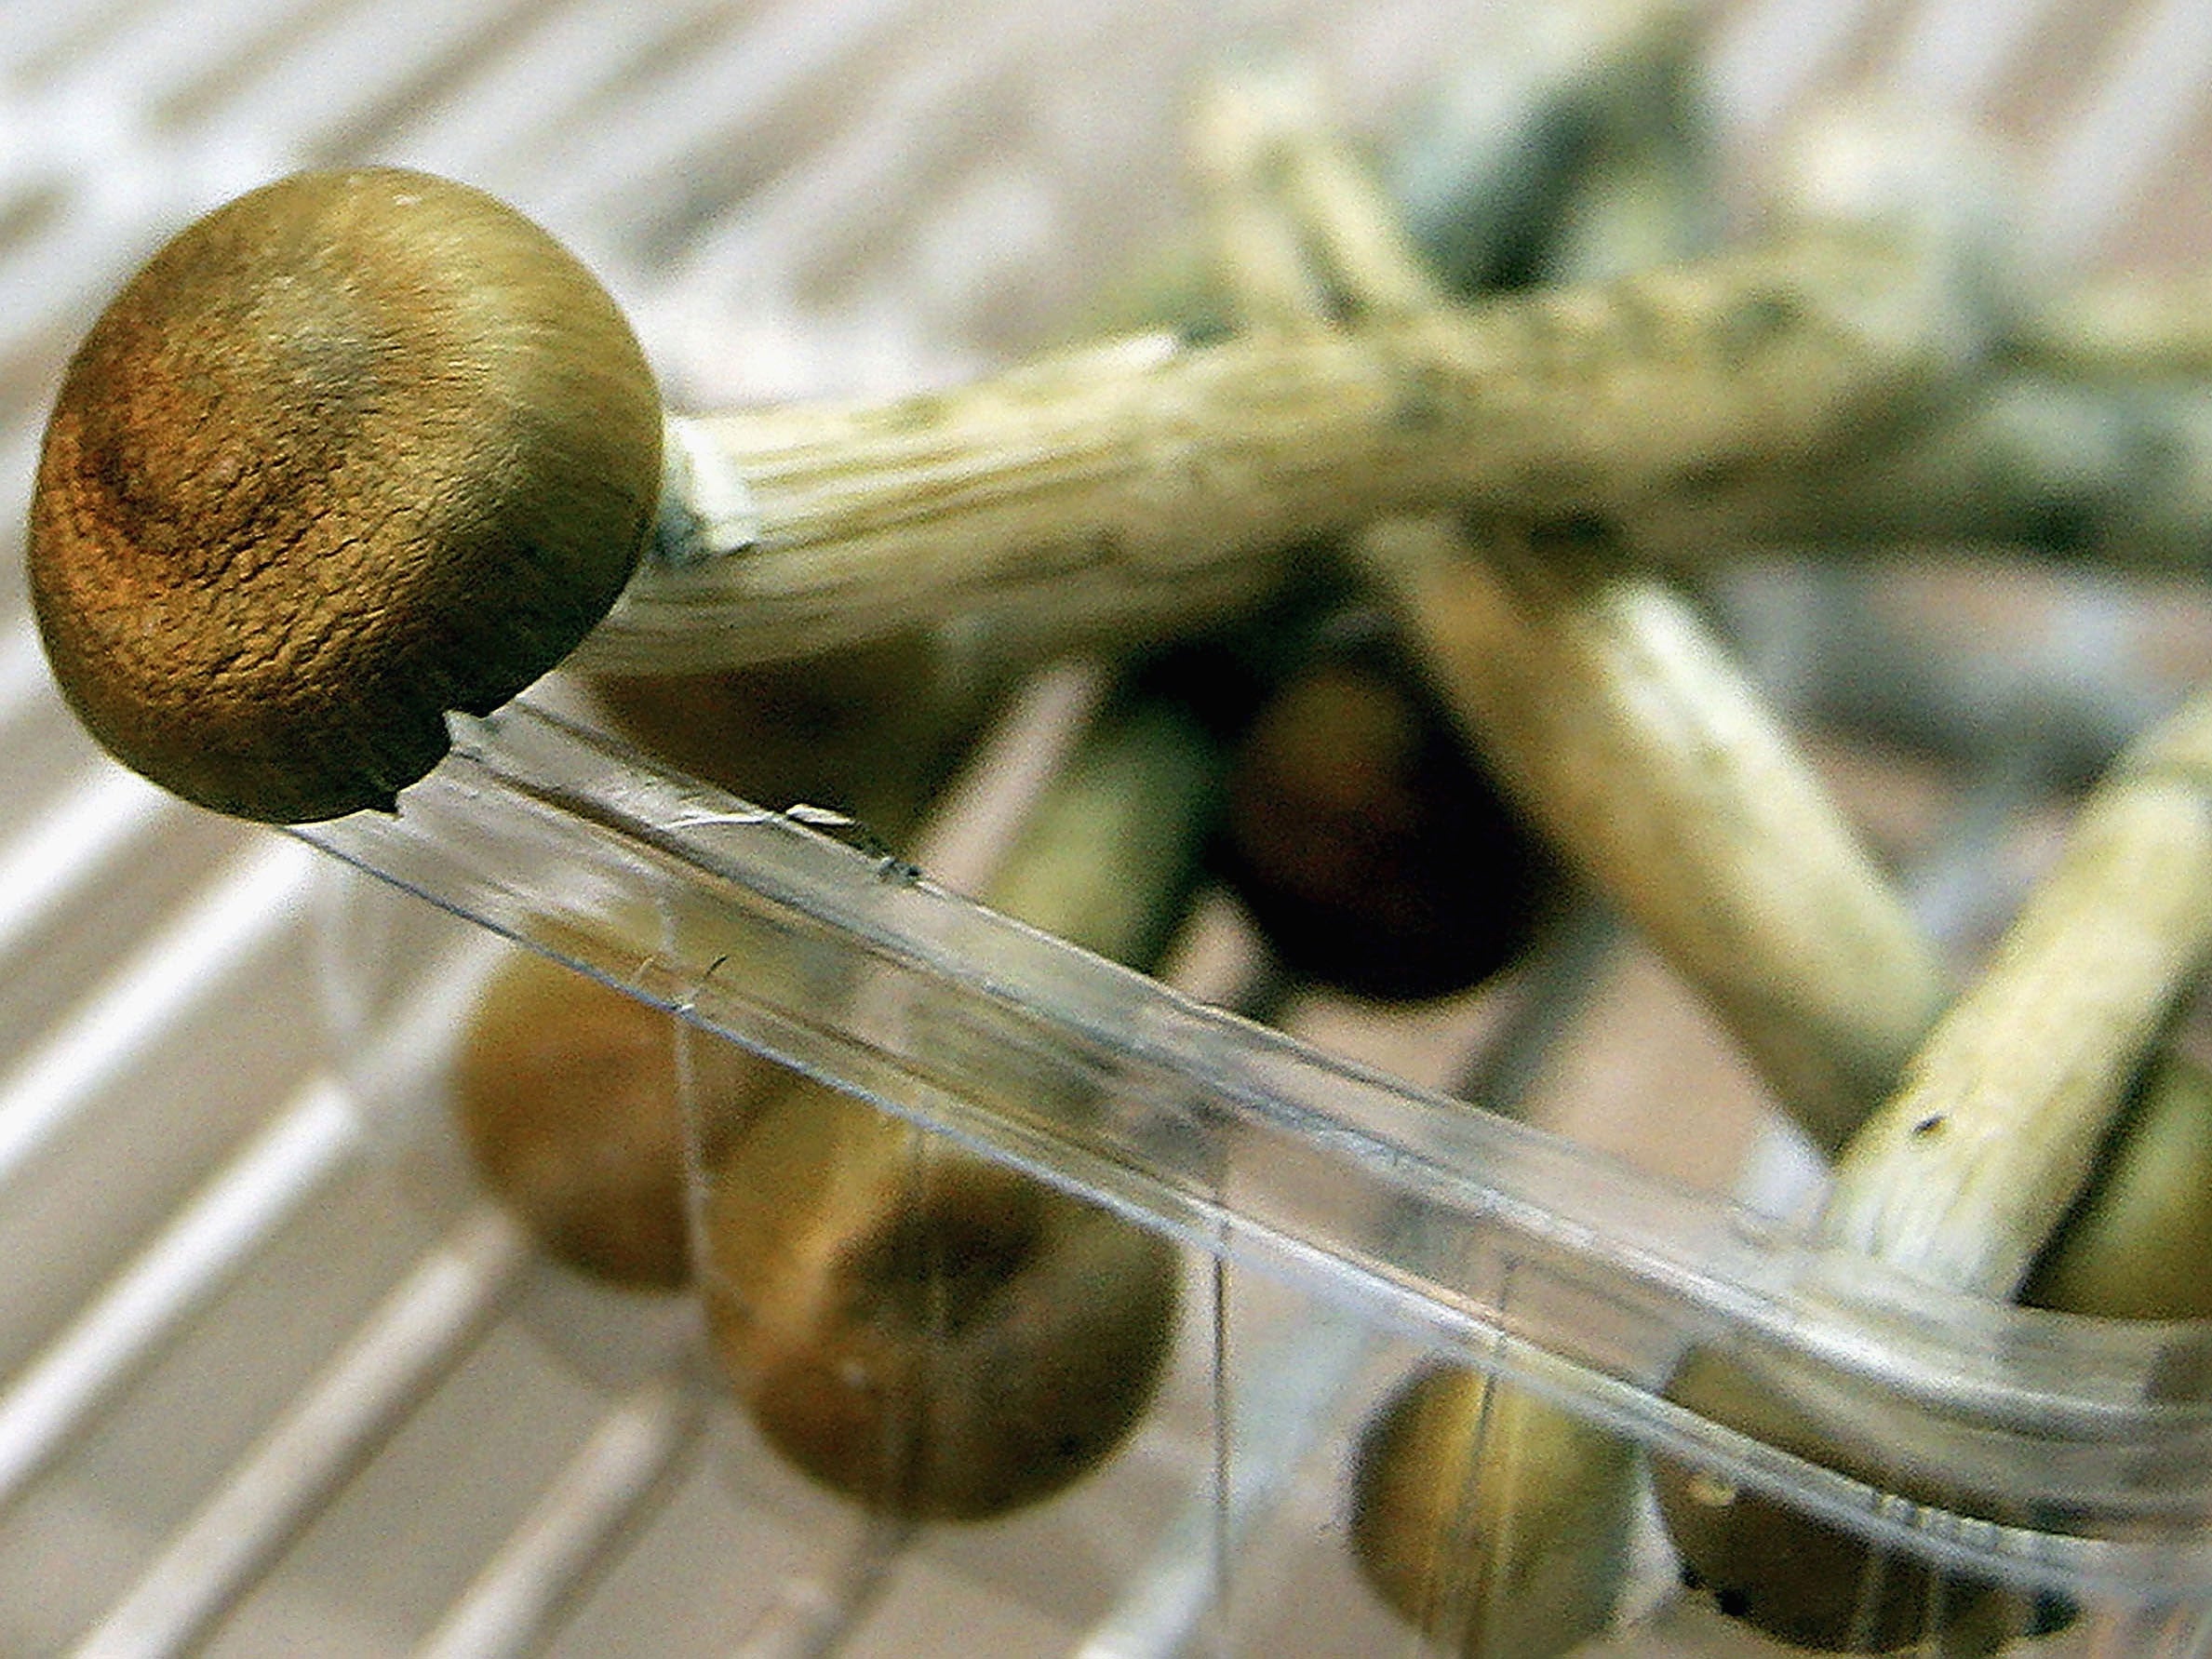 Freshly-picked magic mushrooms sit in a fridge